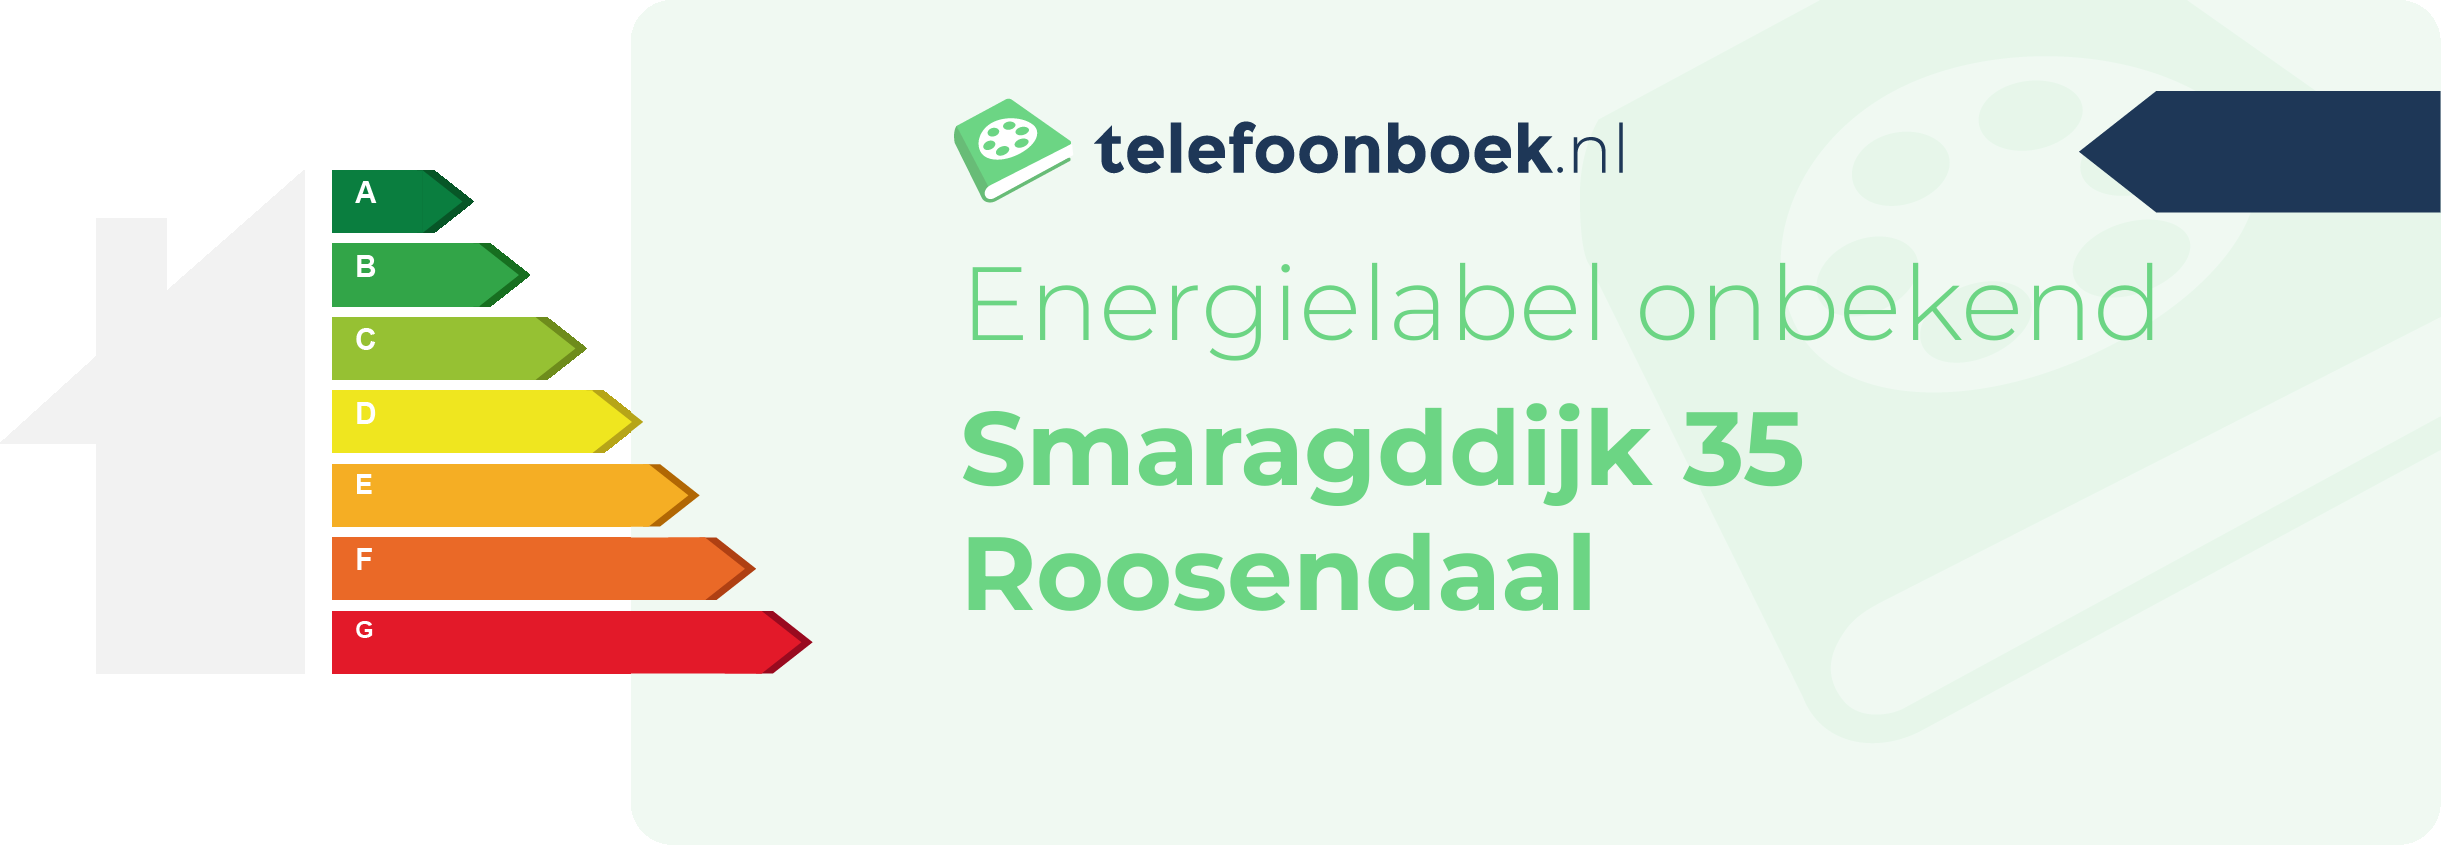 Energielabel Smaragddijk 35 Roosendaal